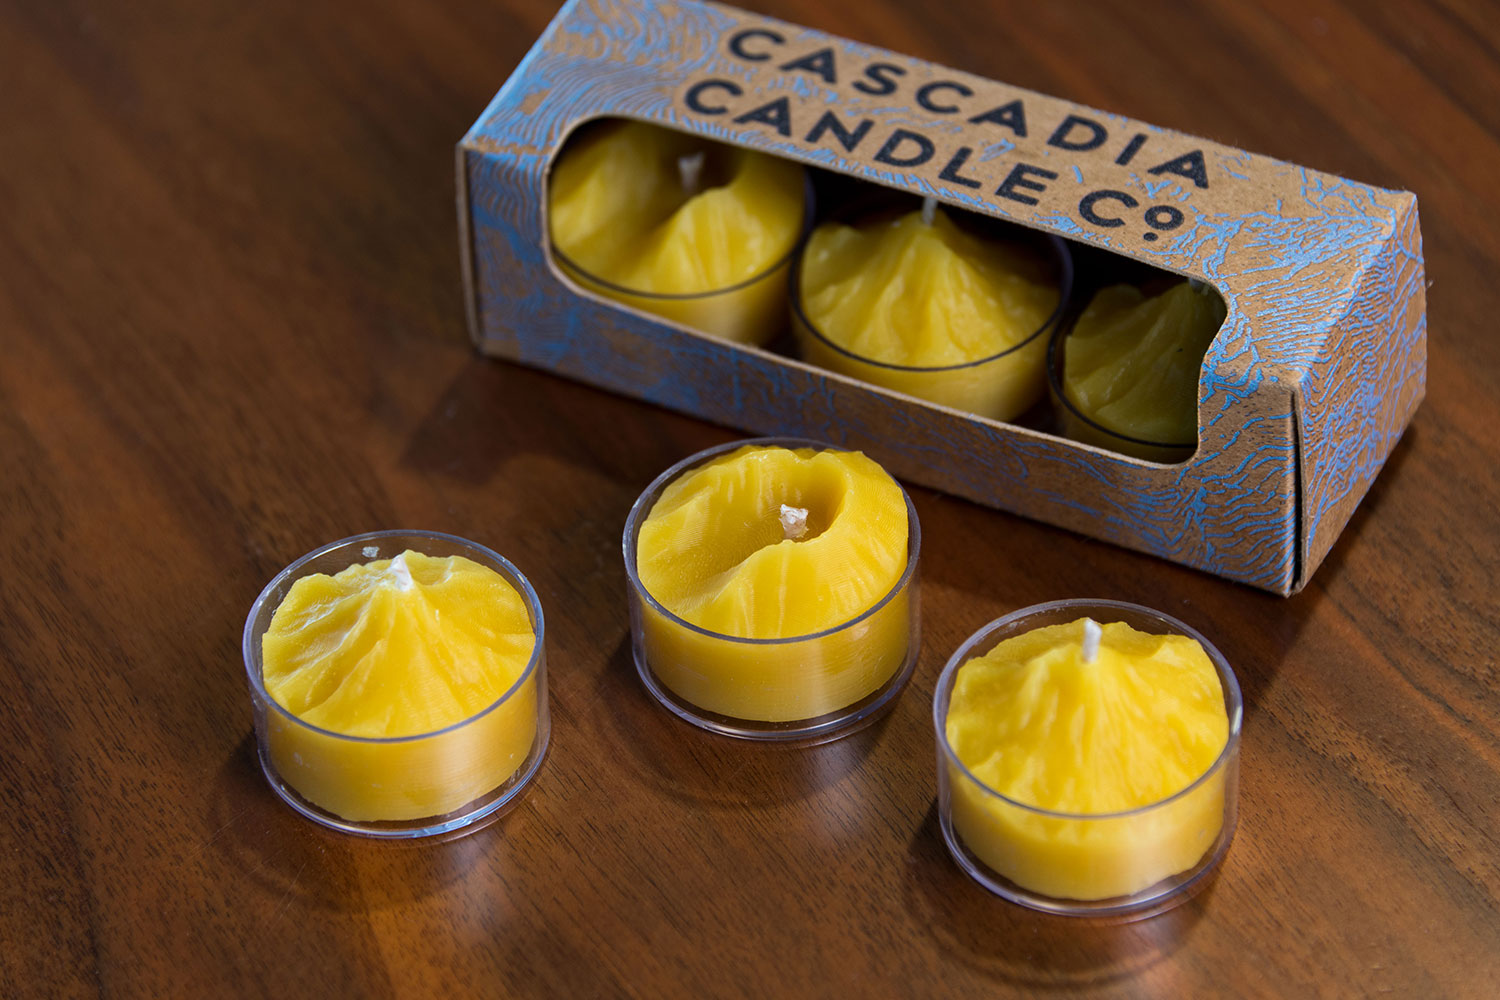 cascadia candle company kickstarter interview brad swift mountain candles littlecandlesbox